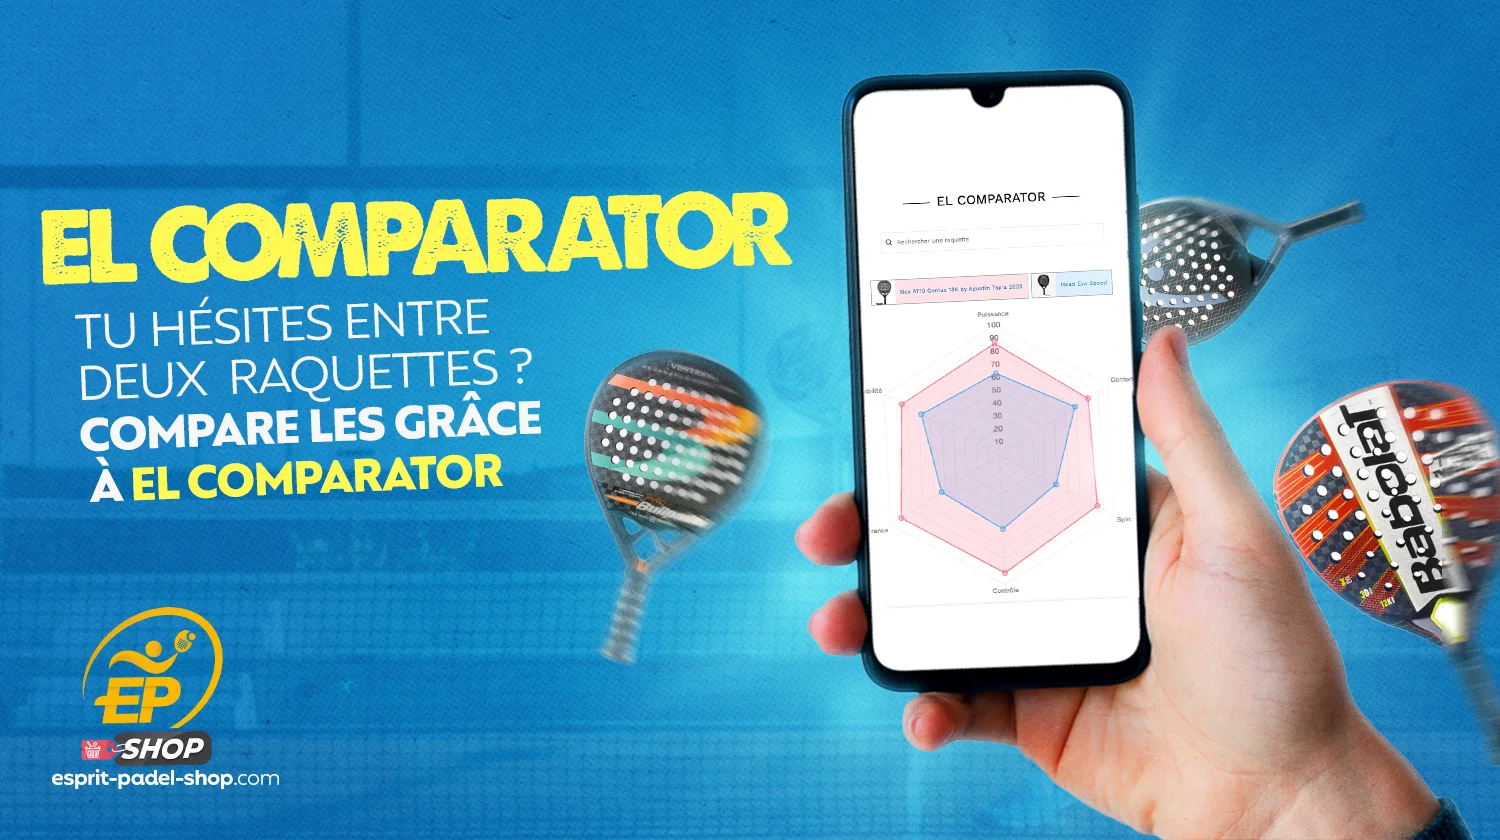 "El Comparator" landar på Esprit Padel Butik